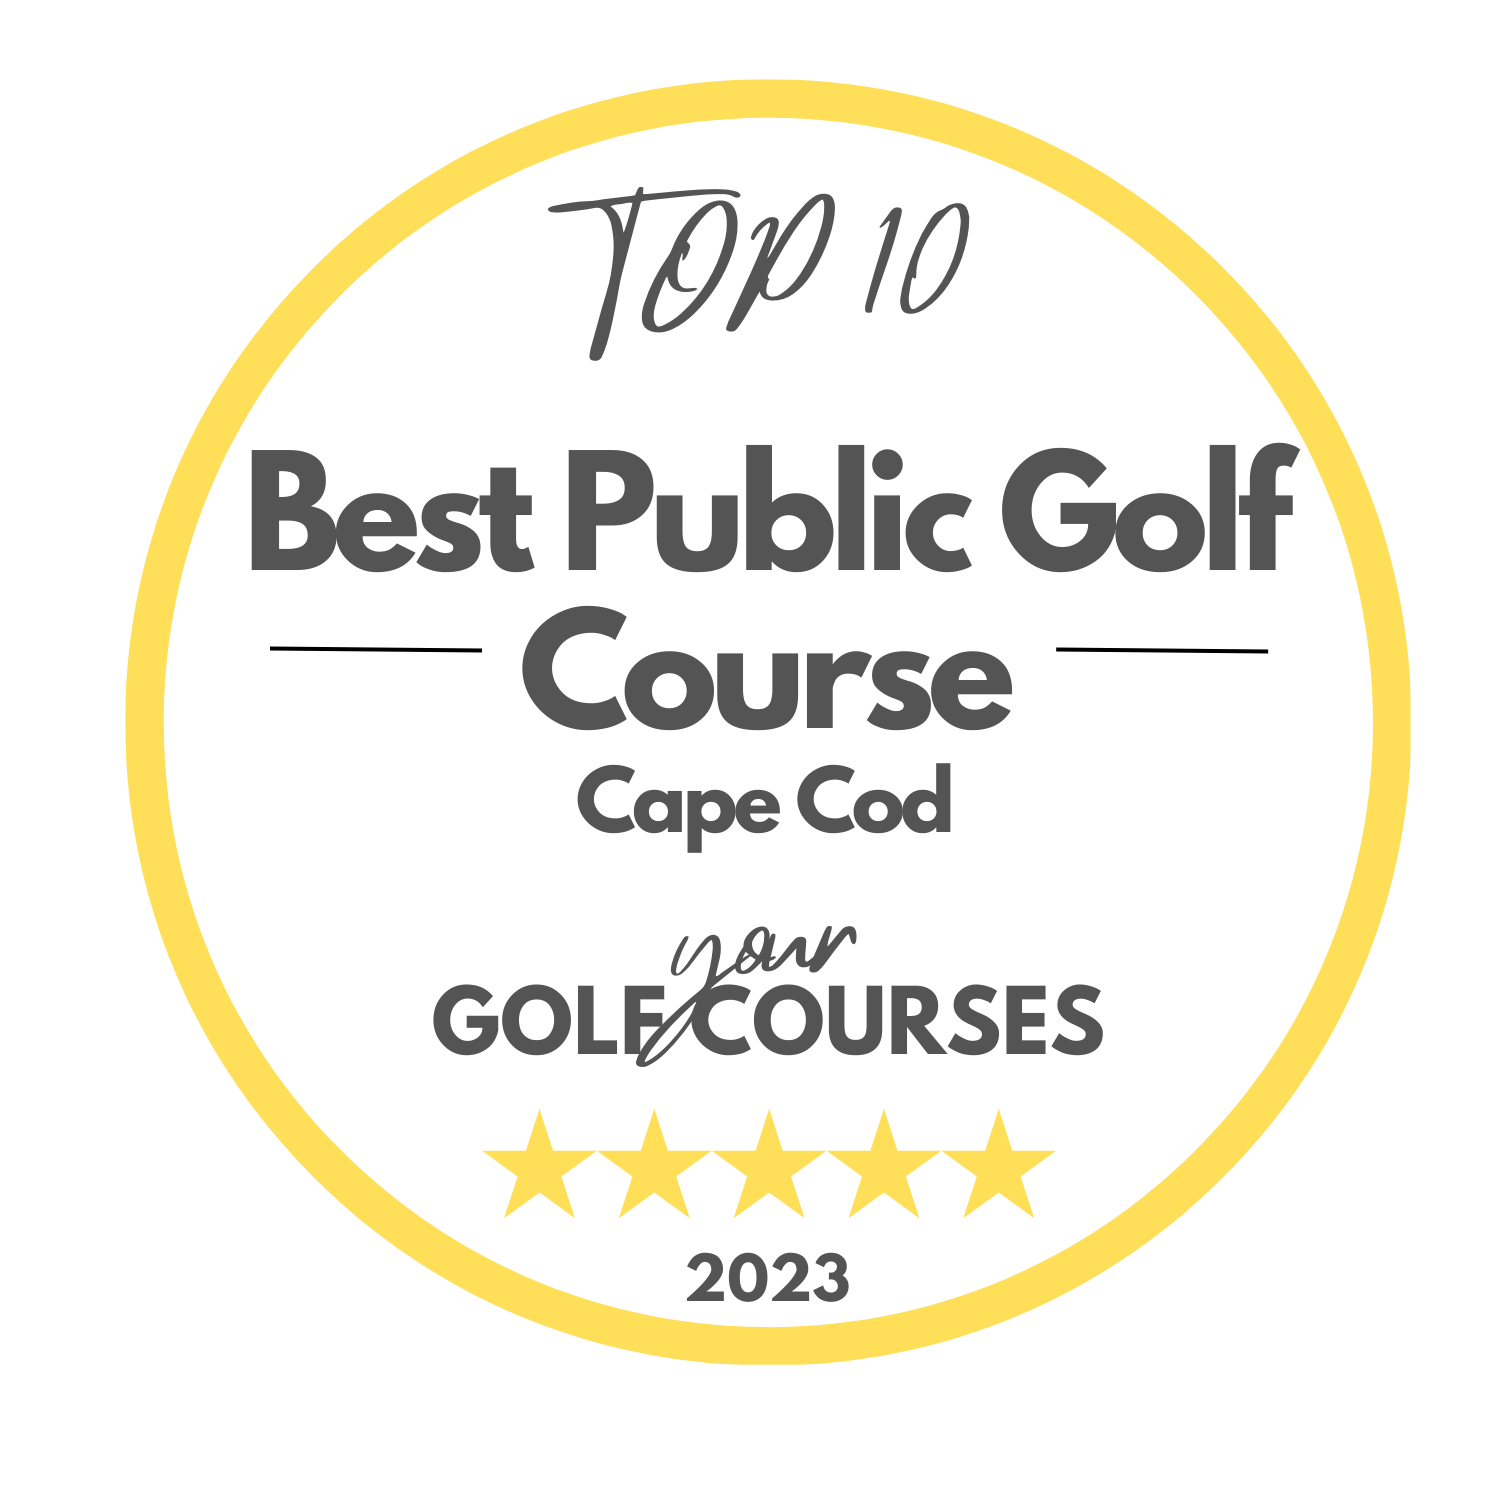 Best Public Golf Course Cape Cod White Background